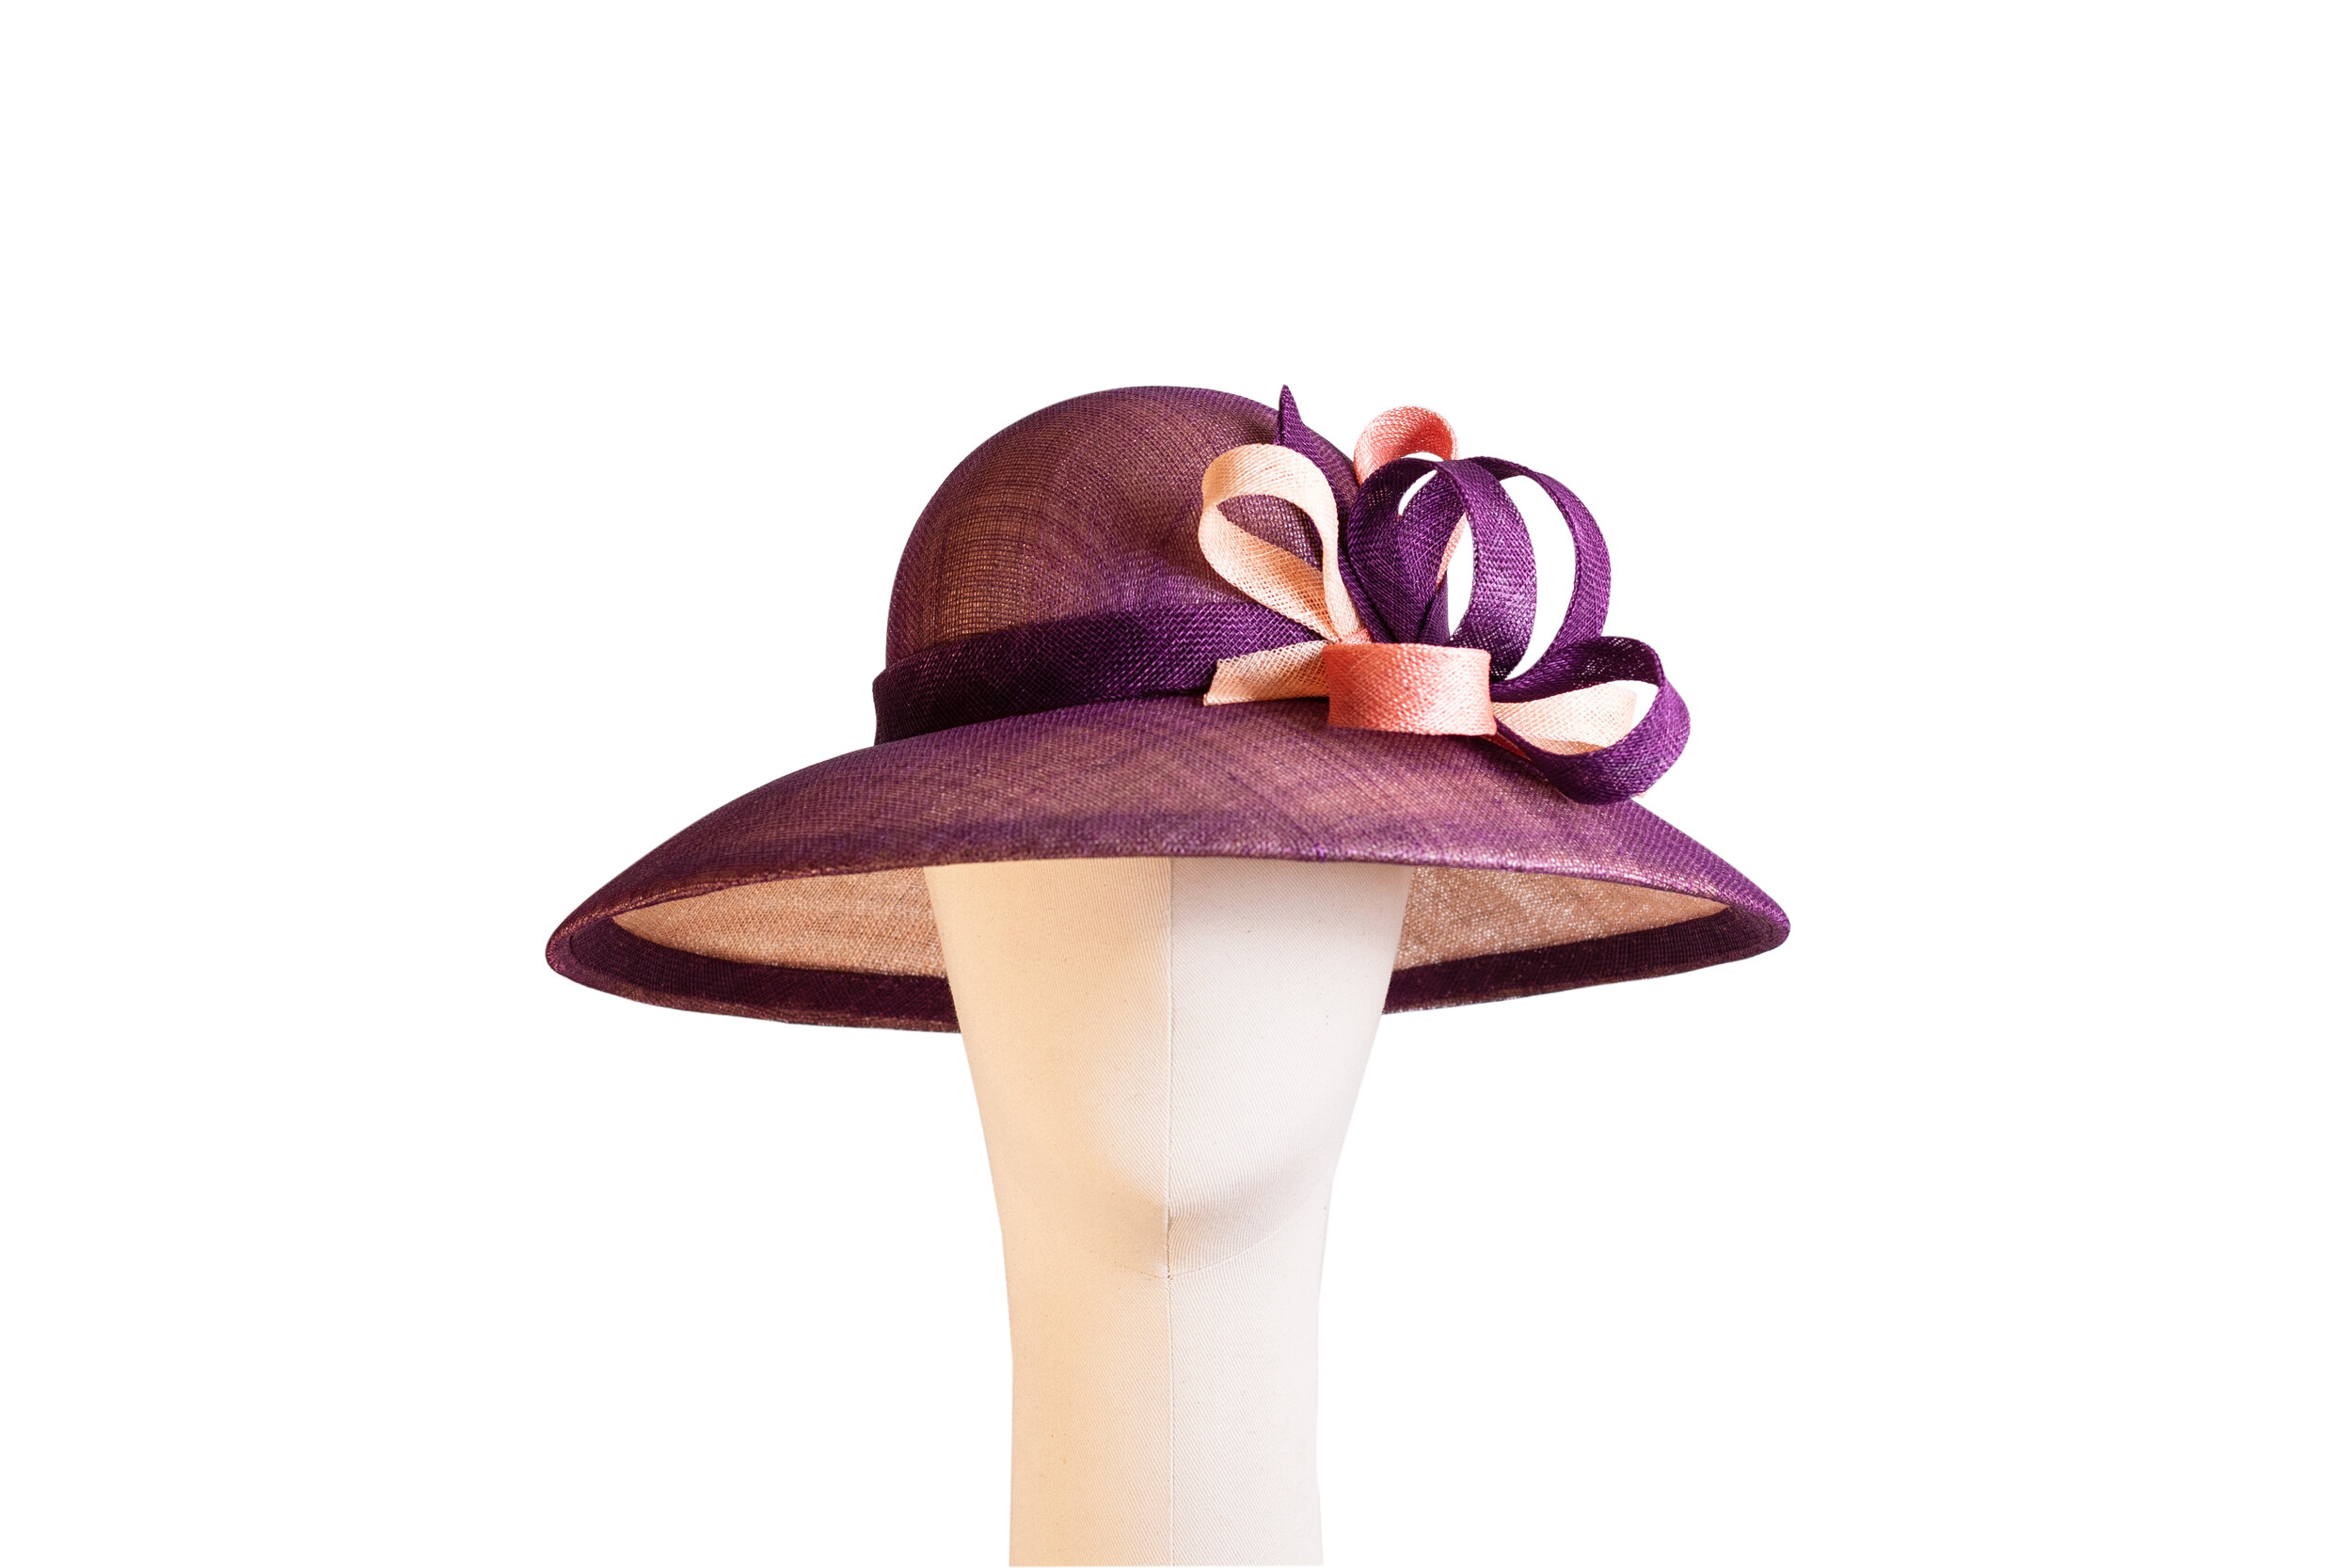 Maria_Etkind_purple_pink-hat_web.jpg